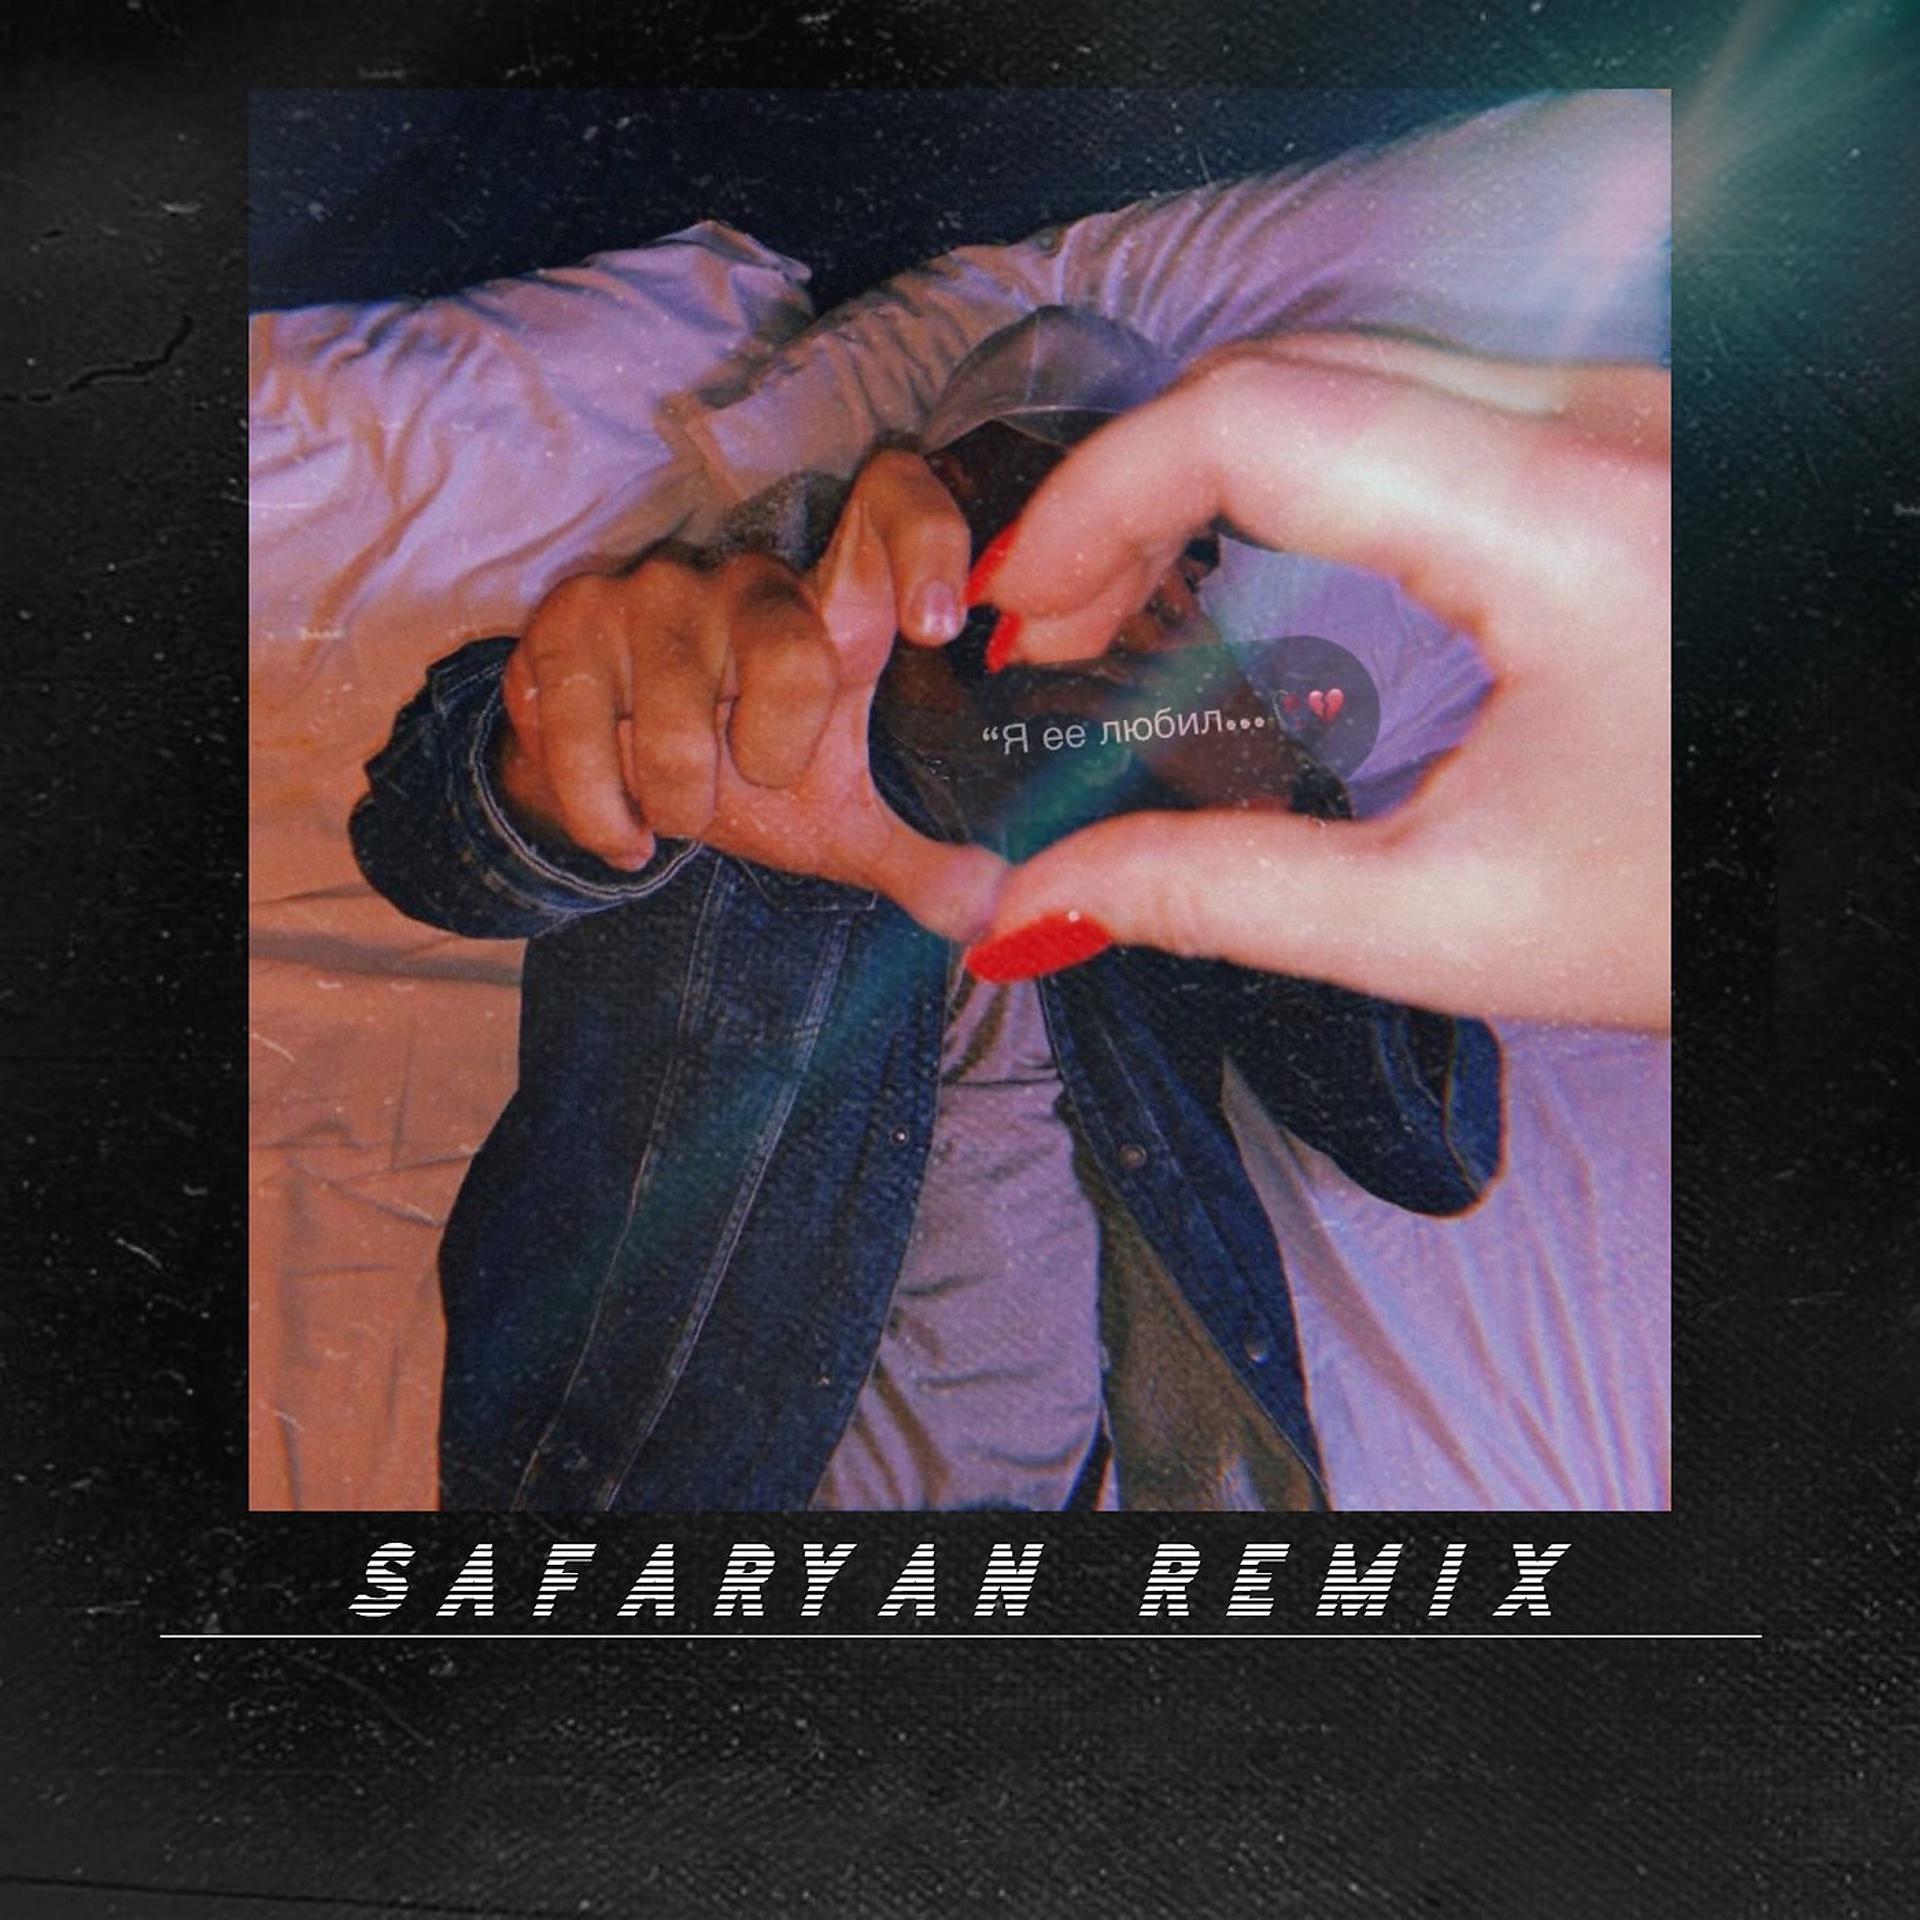 Обожай ремикс. Safaryan Beats. (Safaryan Remix). Я её любил Vitali. Джанага альбом.